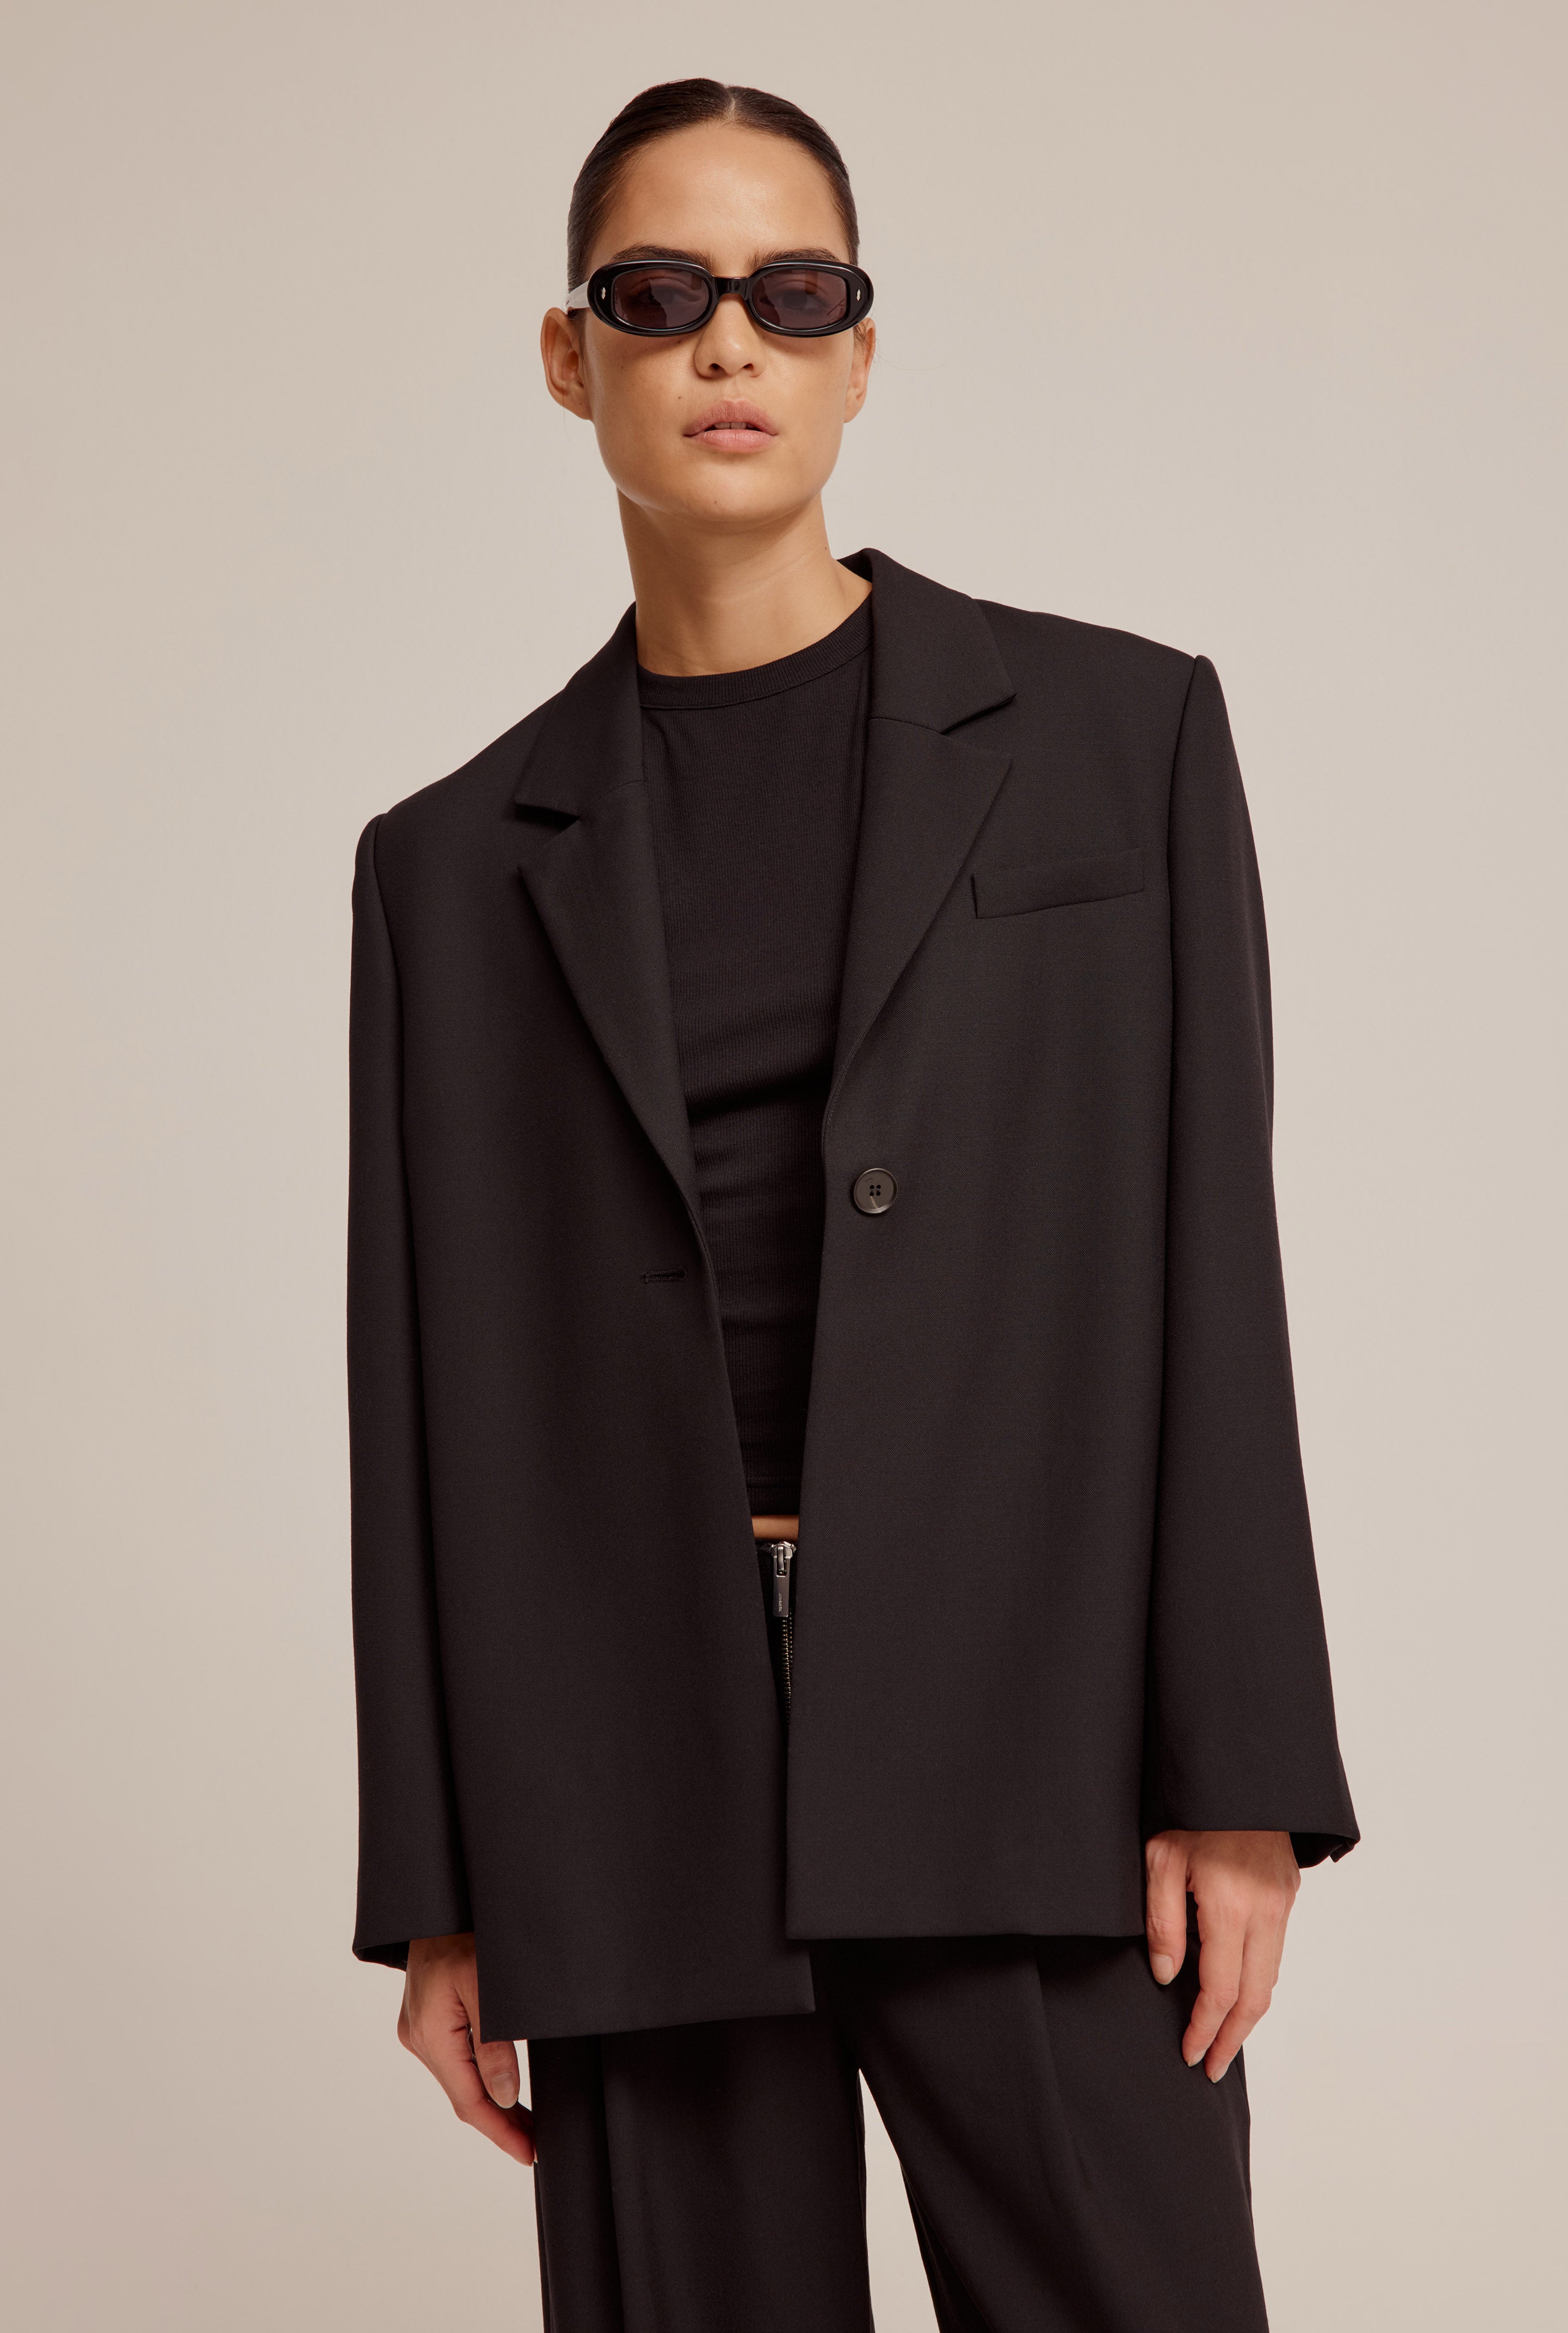 Venroy - Womens Tailored Wool Blazer | Venroy | Premium Leisurewear ...